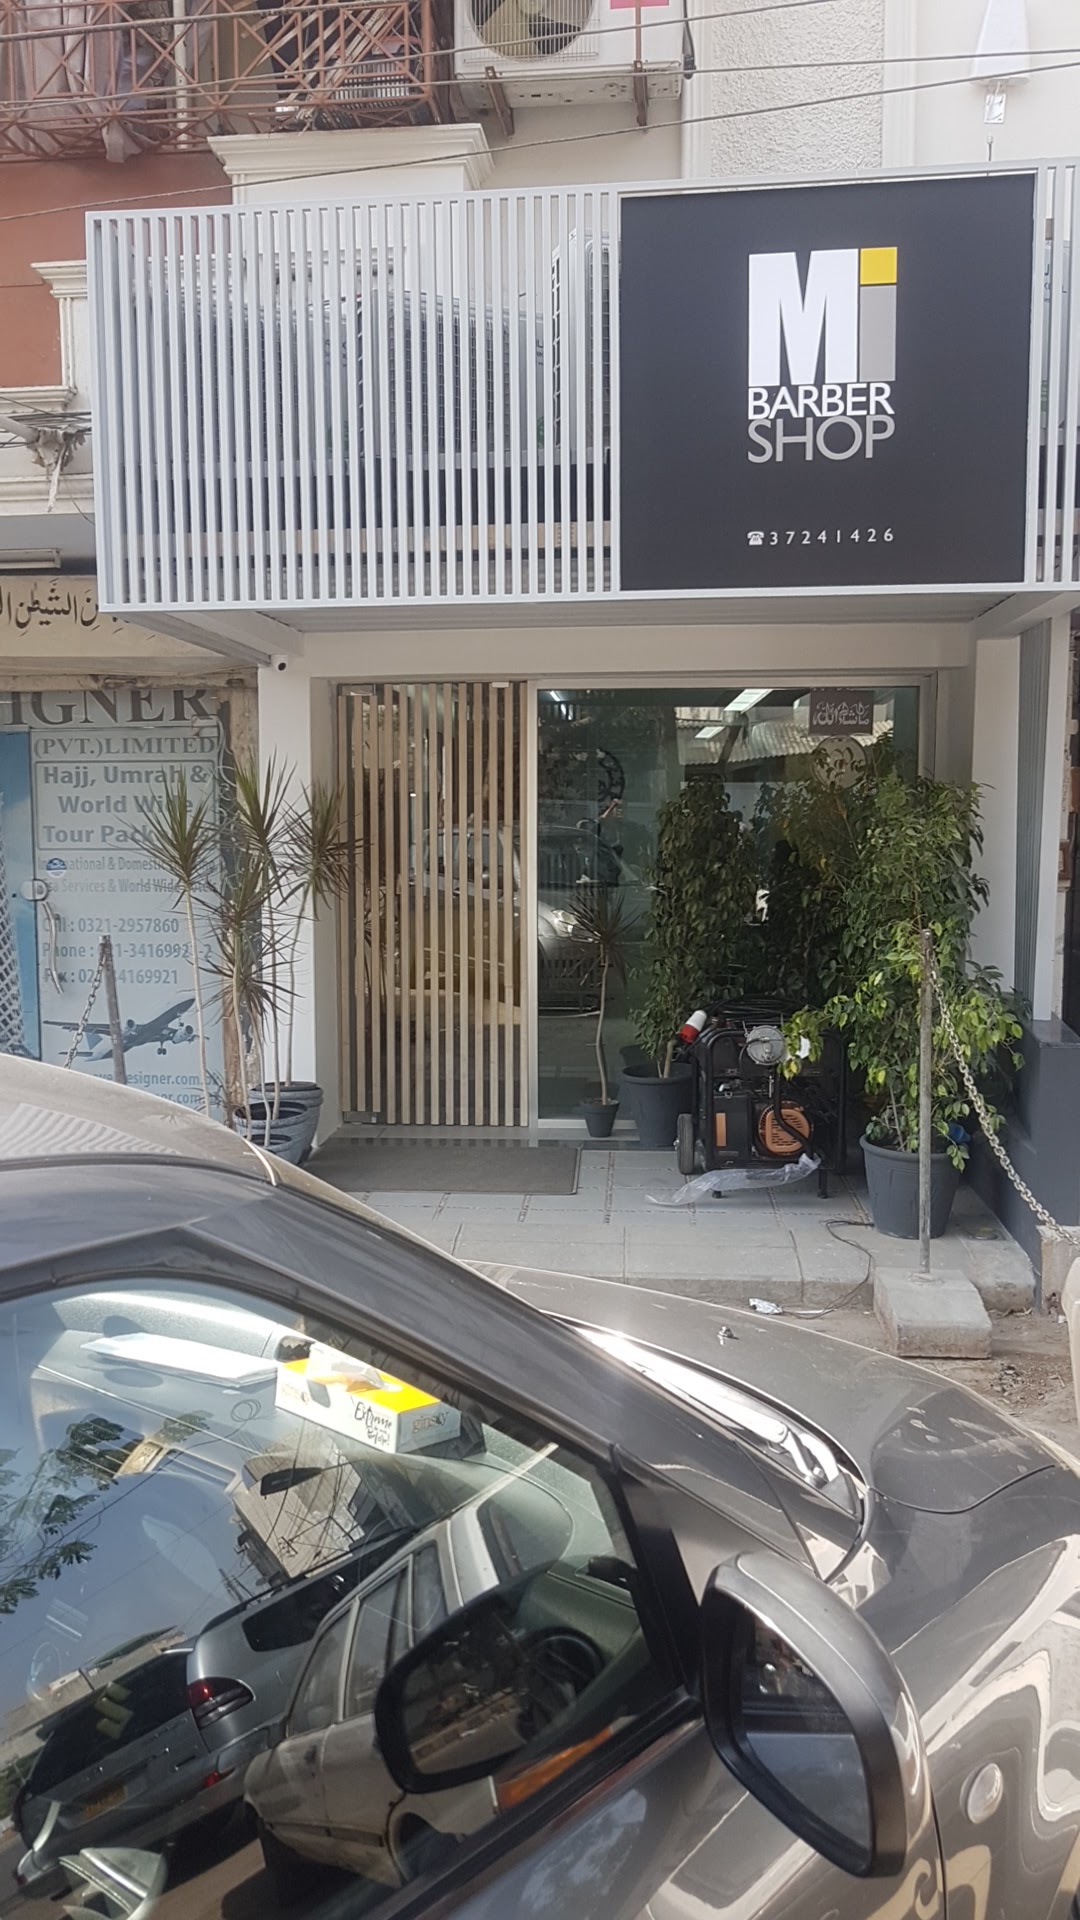 MI Barber Shop